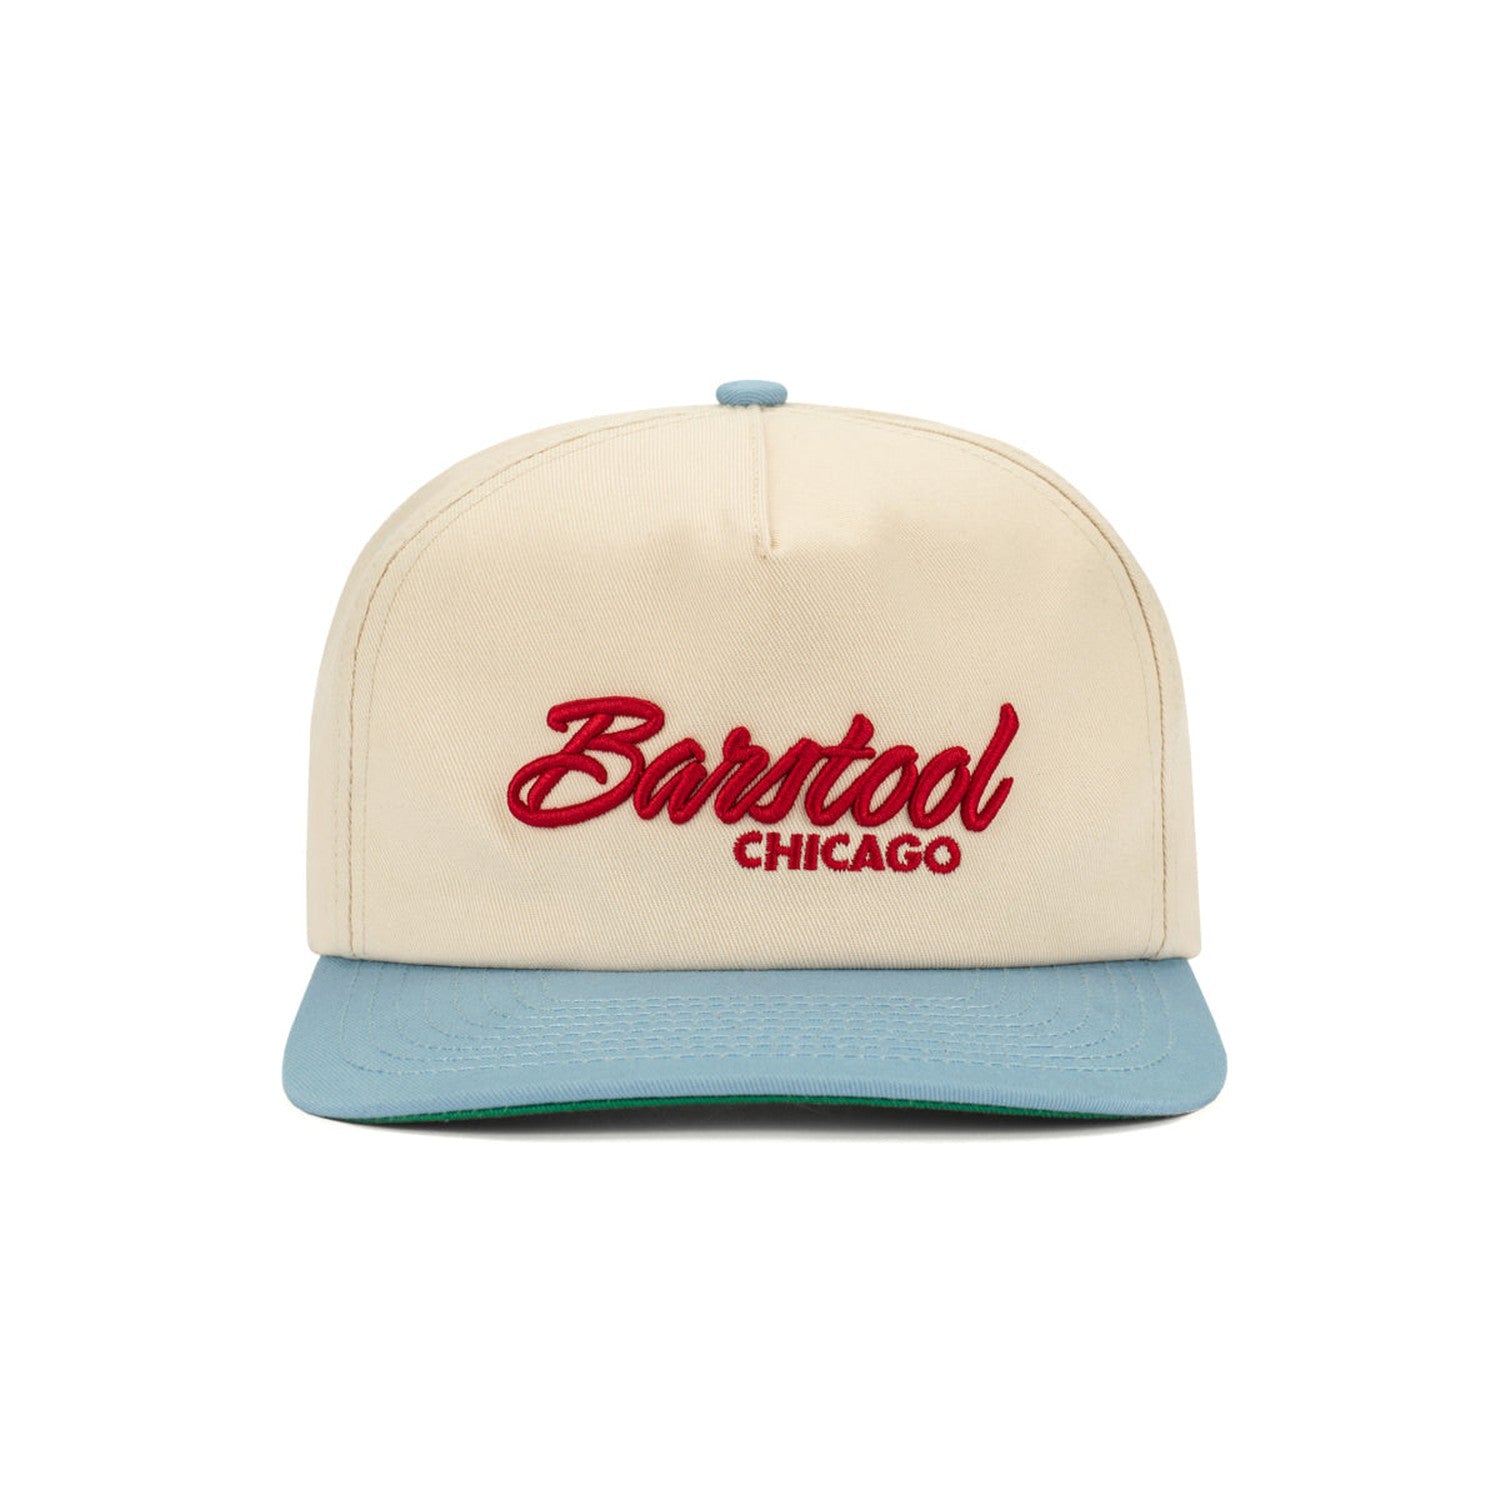 Barstool Chicago Retro Snapback Hat